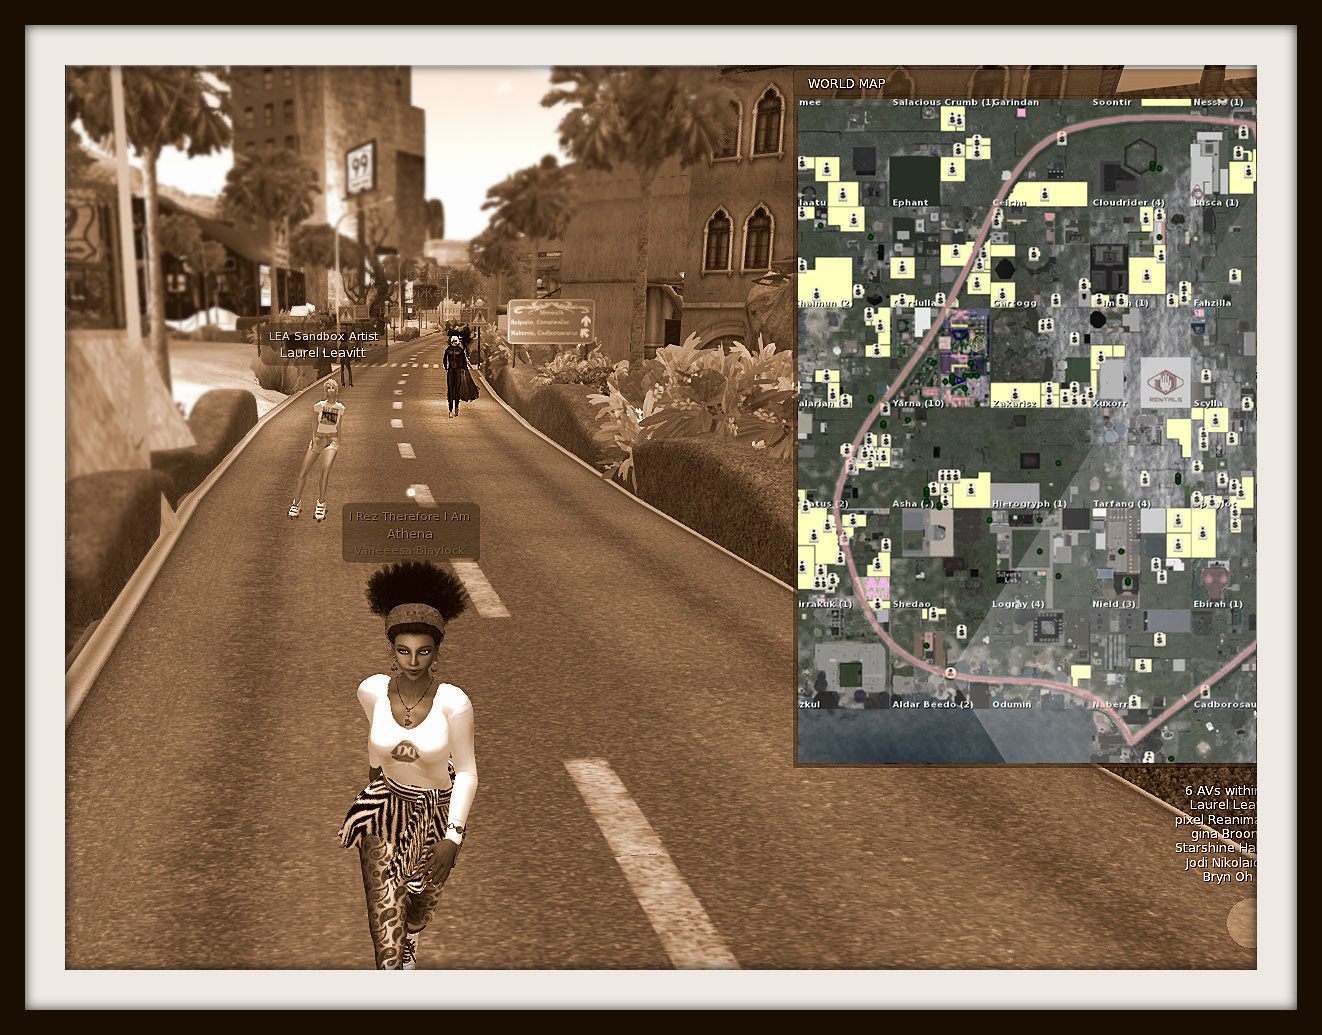 Screen Cap of Second Life Firestorm Viewer with avatars waking down a street